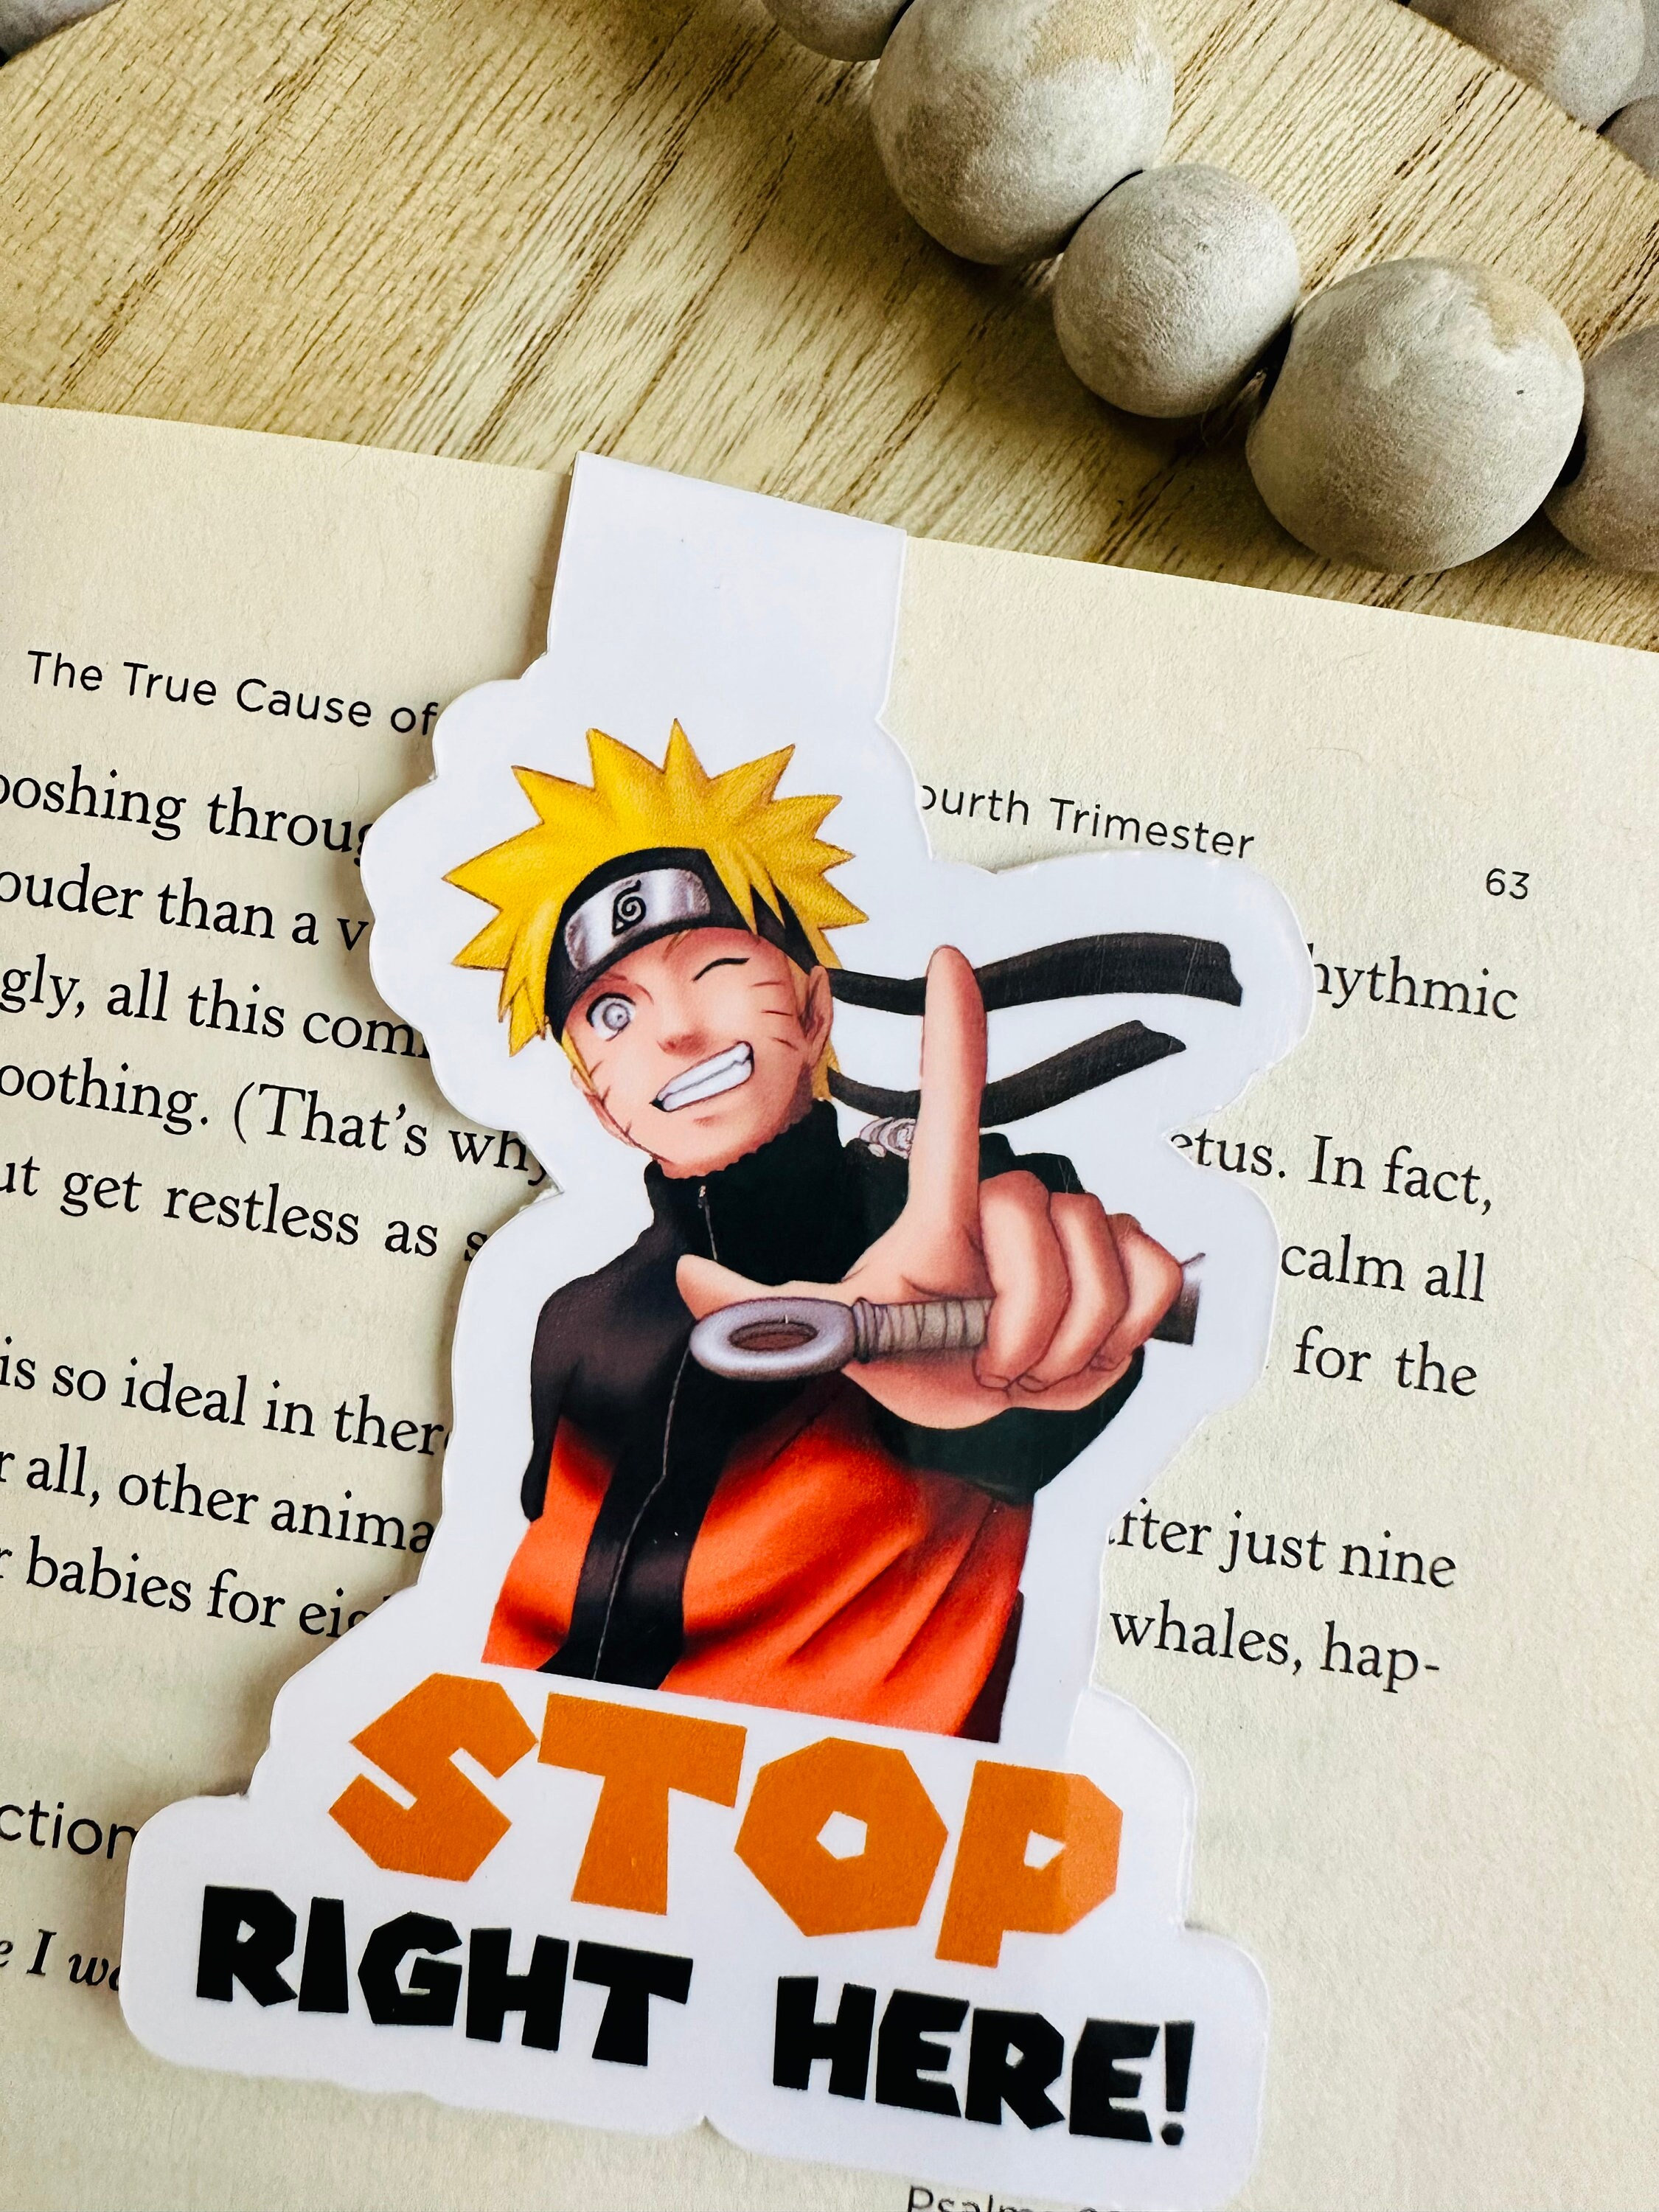 Custom ideas: DIY: How to Make Notebooks Naruto